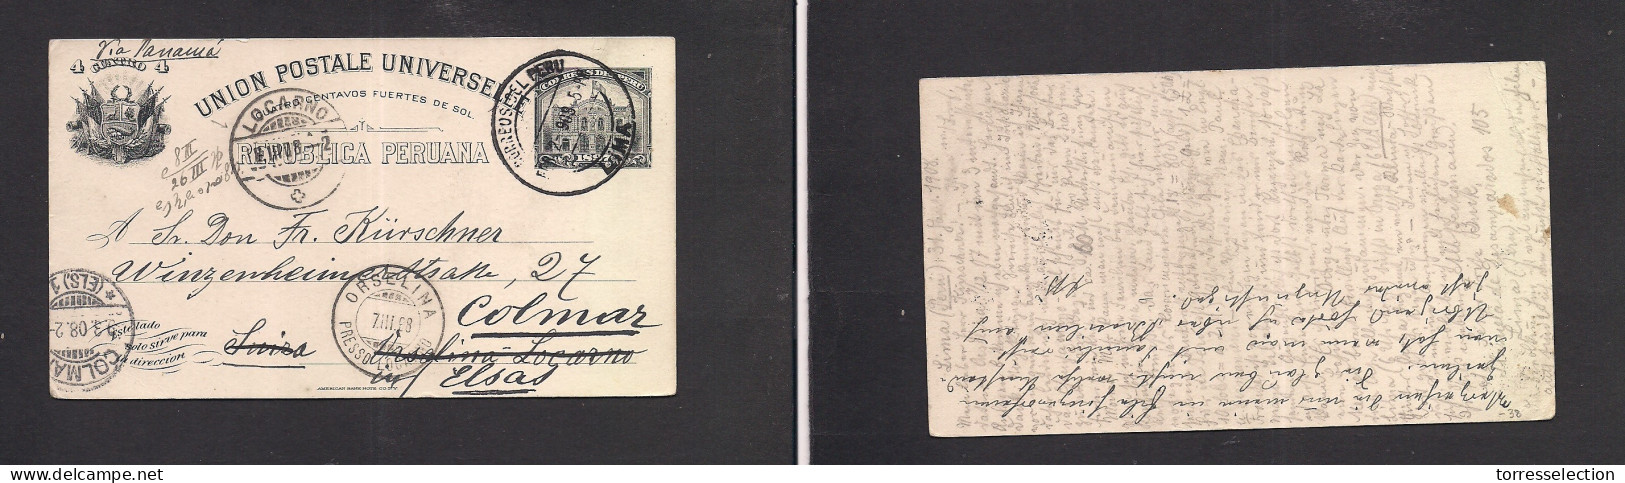 PERU. 1908 (31 Jan) Lima - Colmar, Switzerland (7 March) 4c Black Stat Card. Fine Used Via Panama. XSALE. - Peru